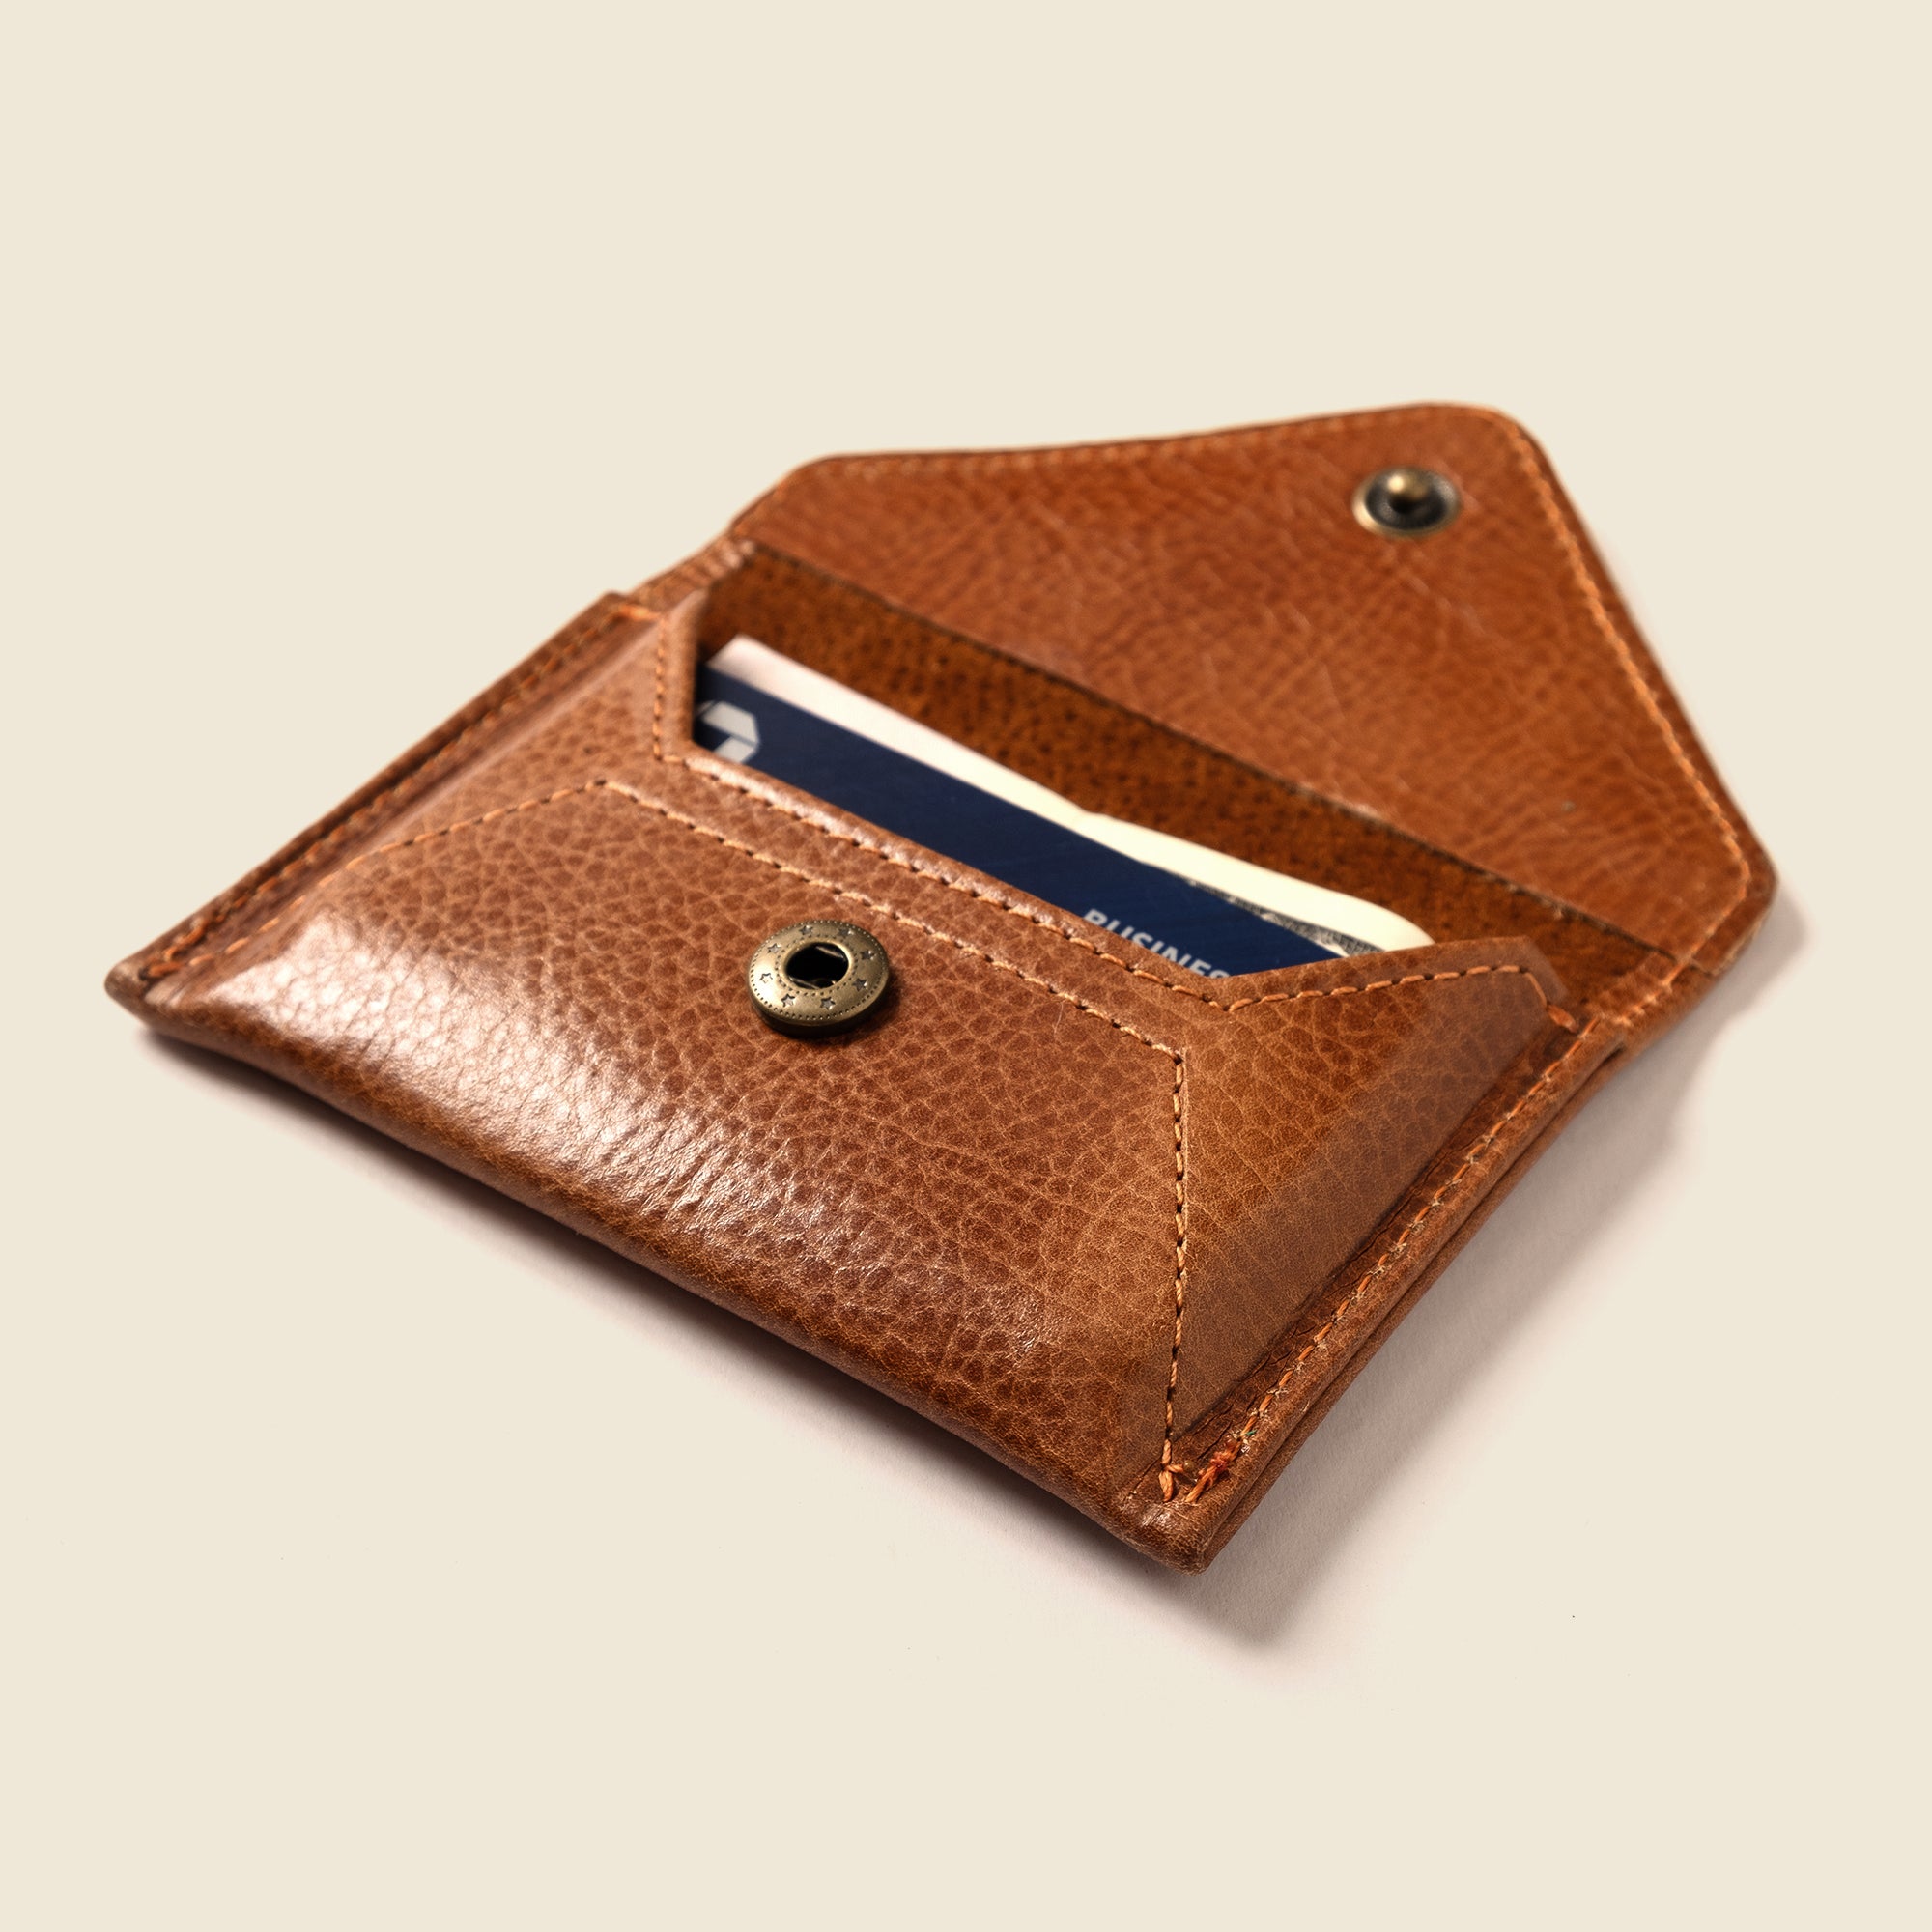 men's brown leather envelope wallet for cards and cash